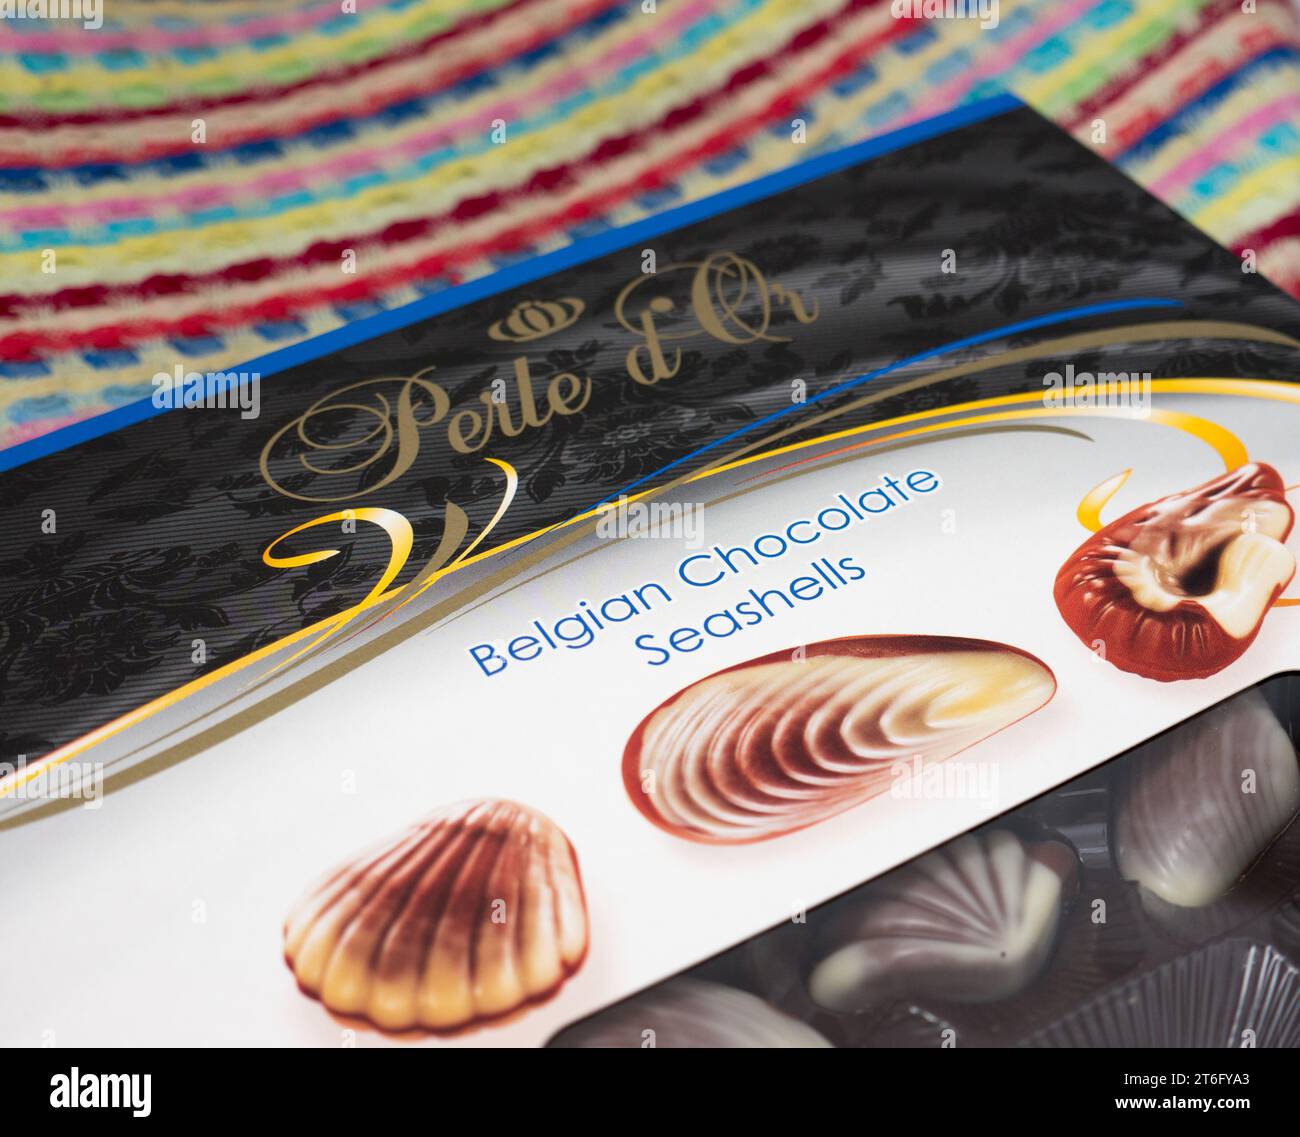 Belgian Chocolate Seashells by The Belgian Chocolate Group. Stock Photo